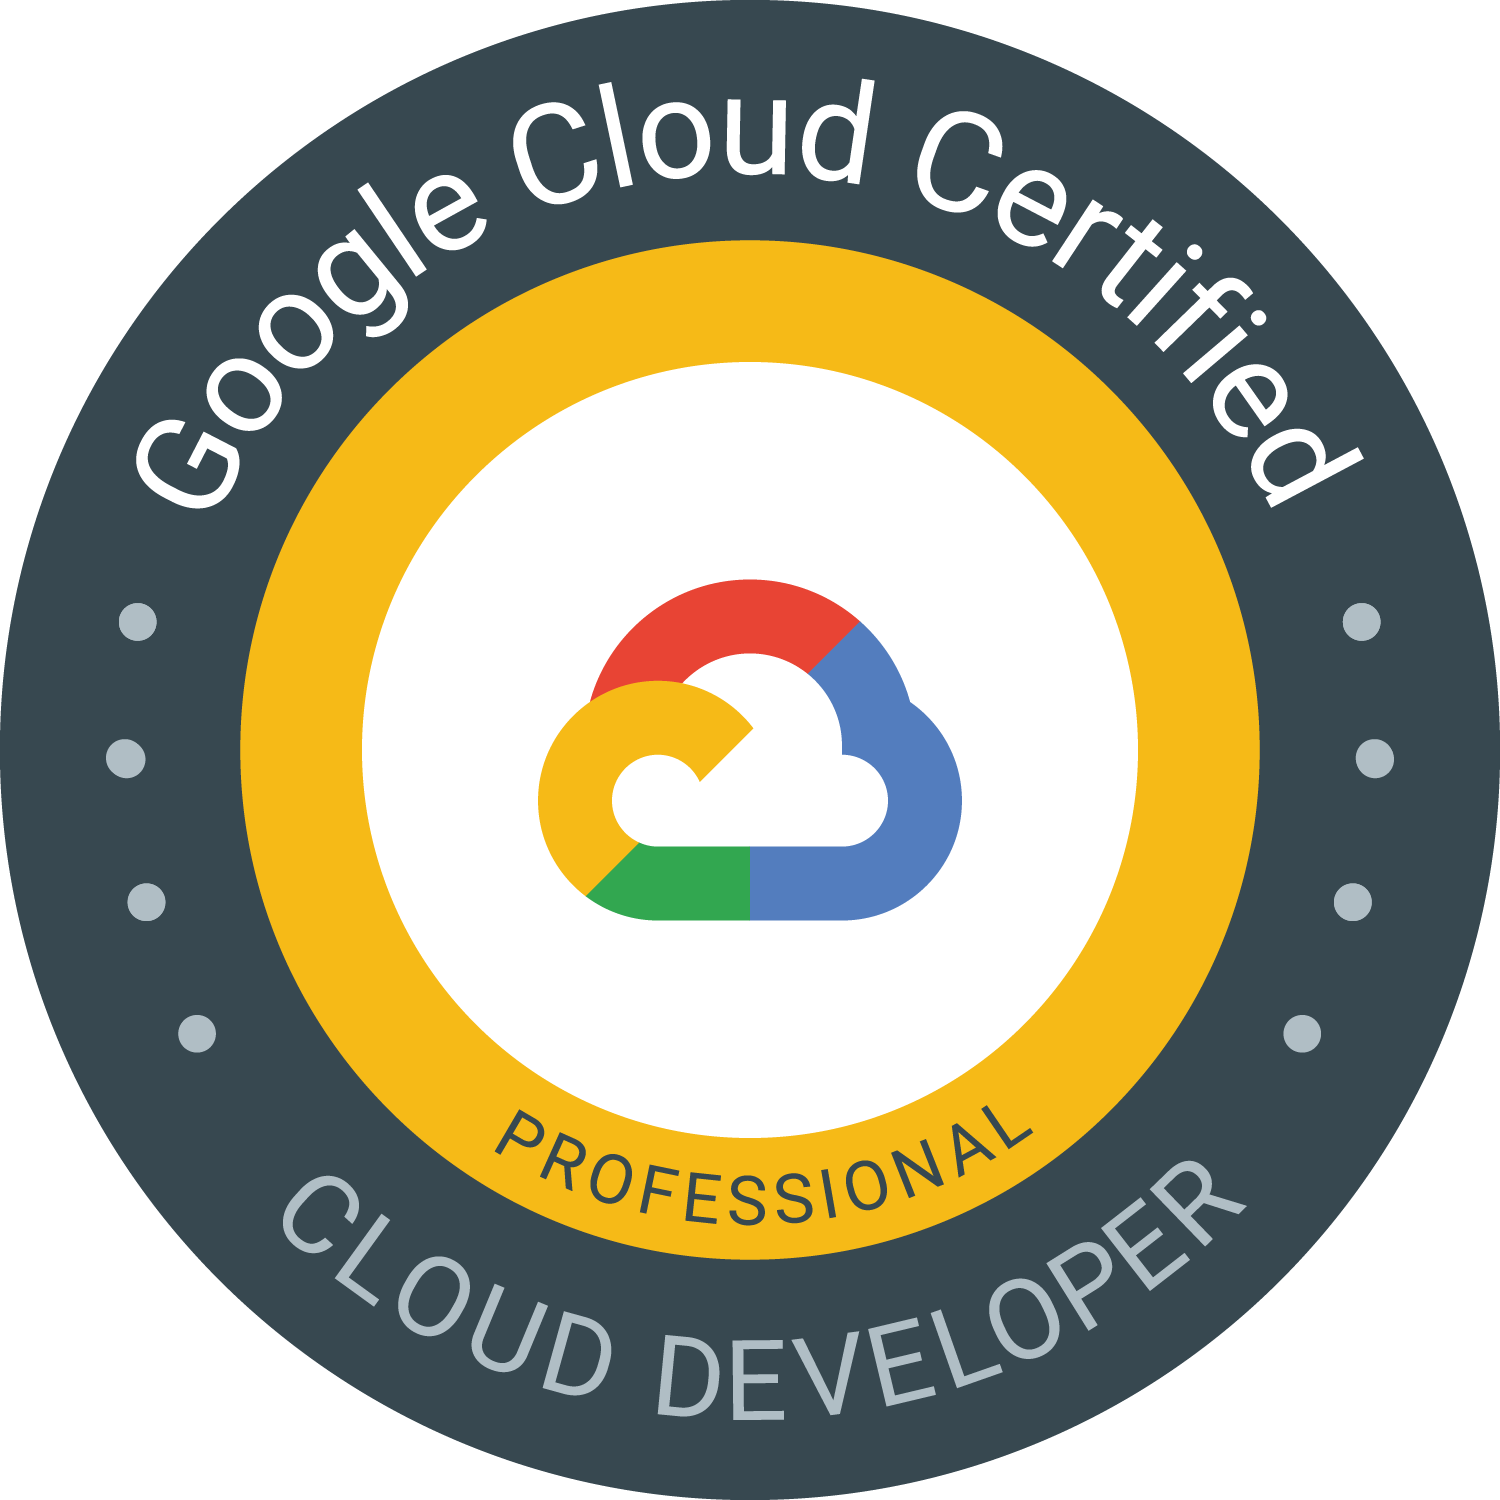 Professional Cloud Developer badge